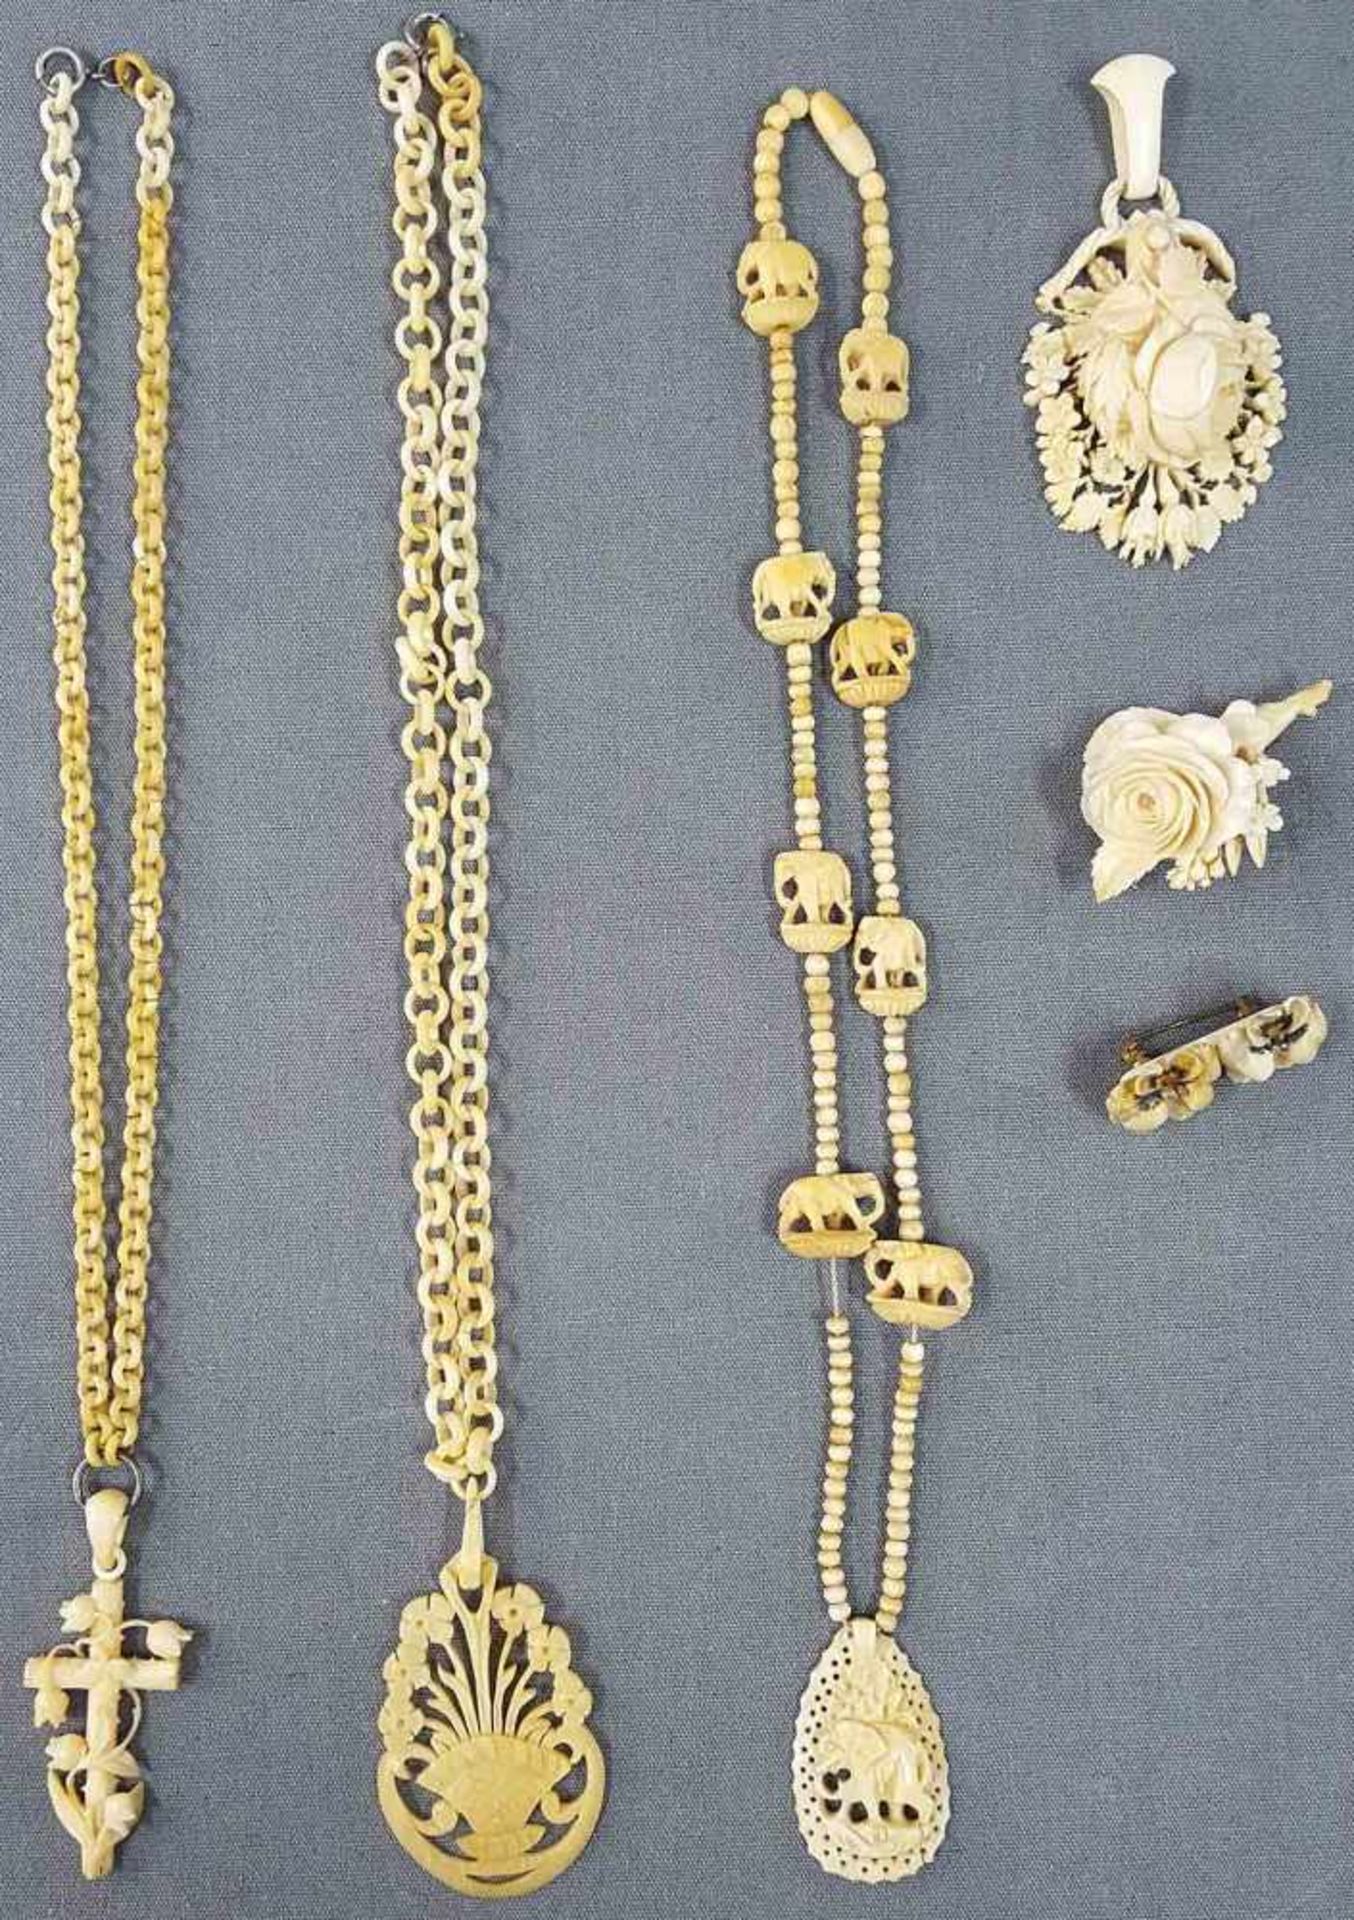 Old jewelry. Ivory around 1900.